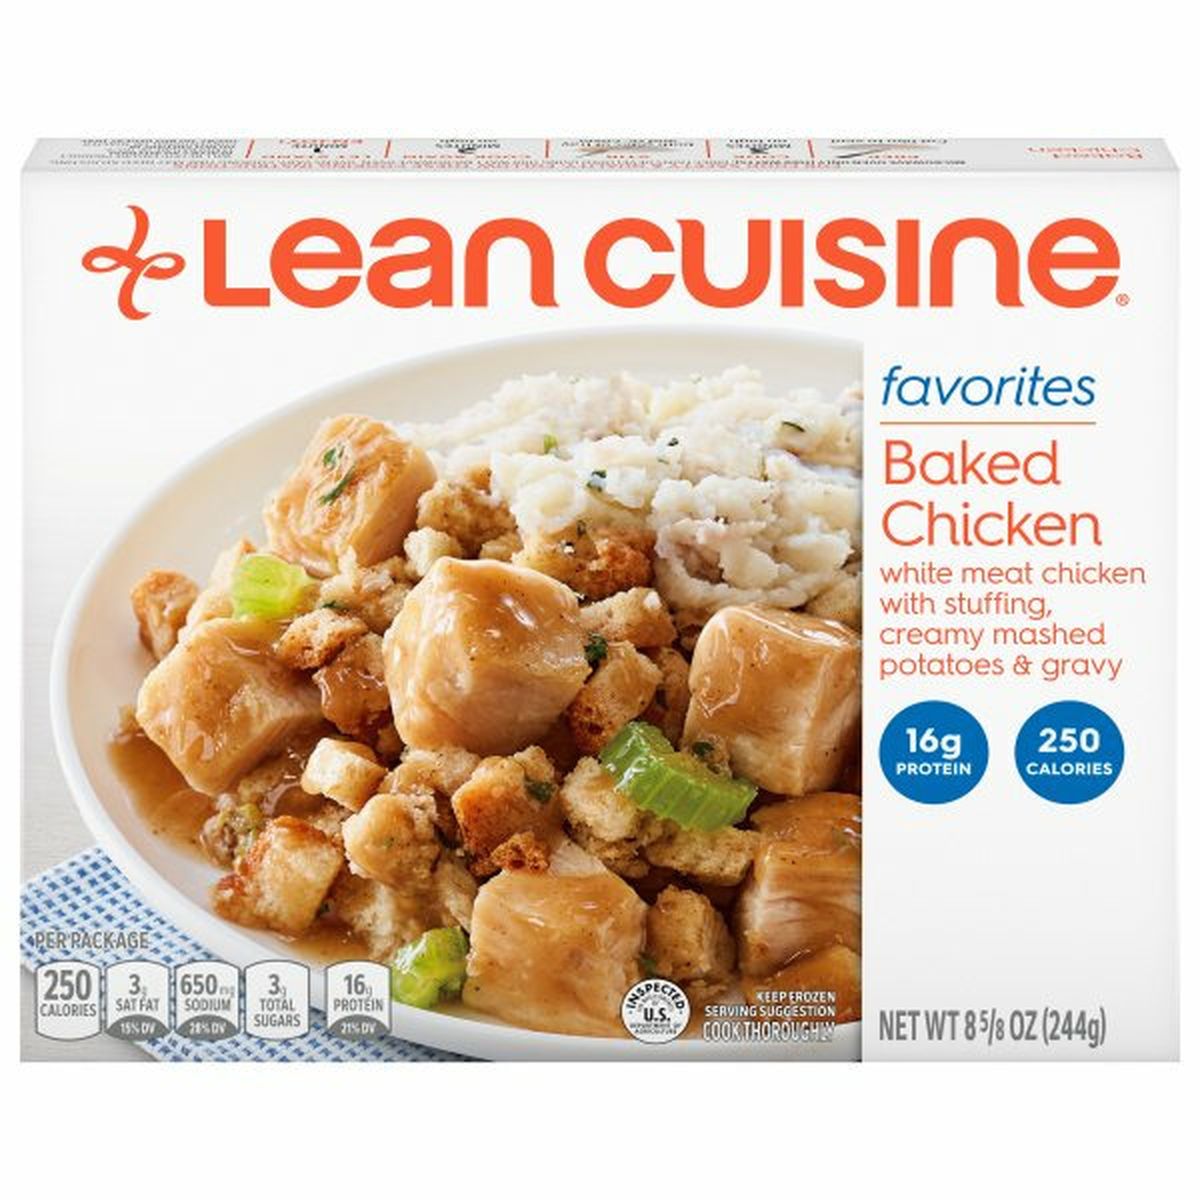 Calories in Lean Cuisine Favorites Chicken, Baked